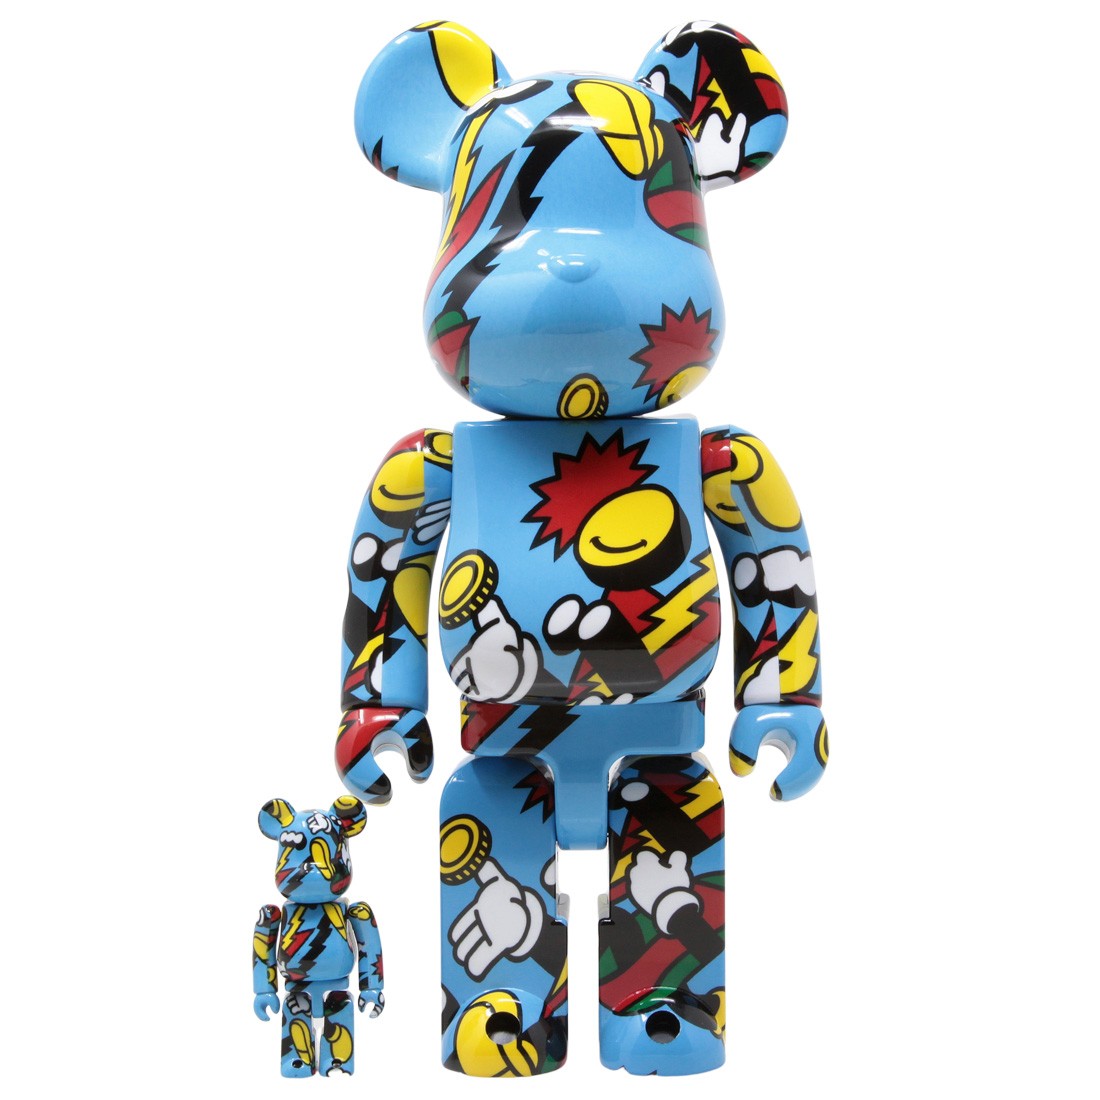 Medicom Grafflex Arts 100% 400% Bearbrick Figure Set blue